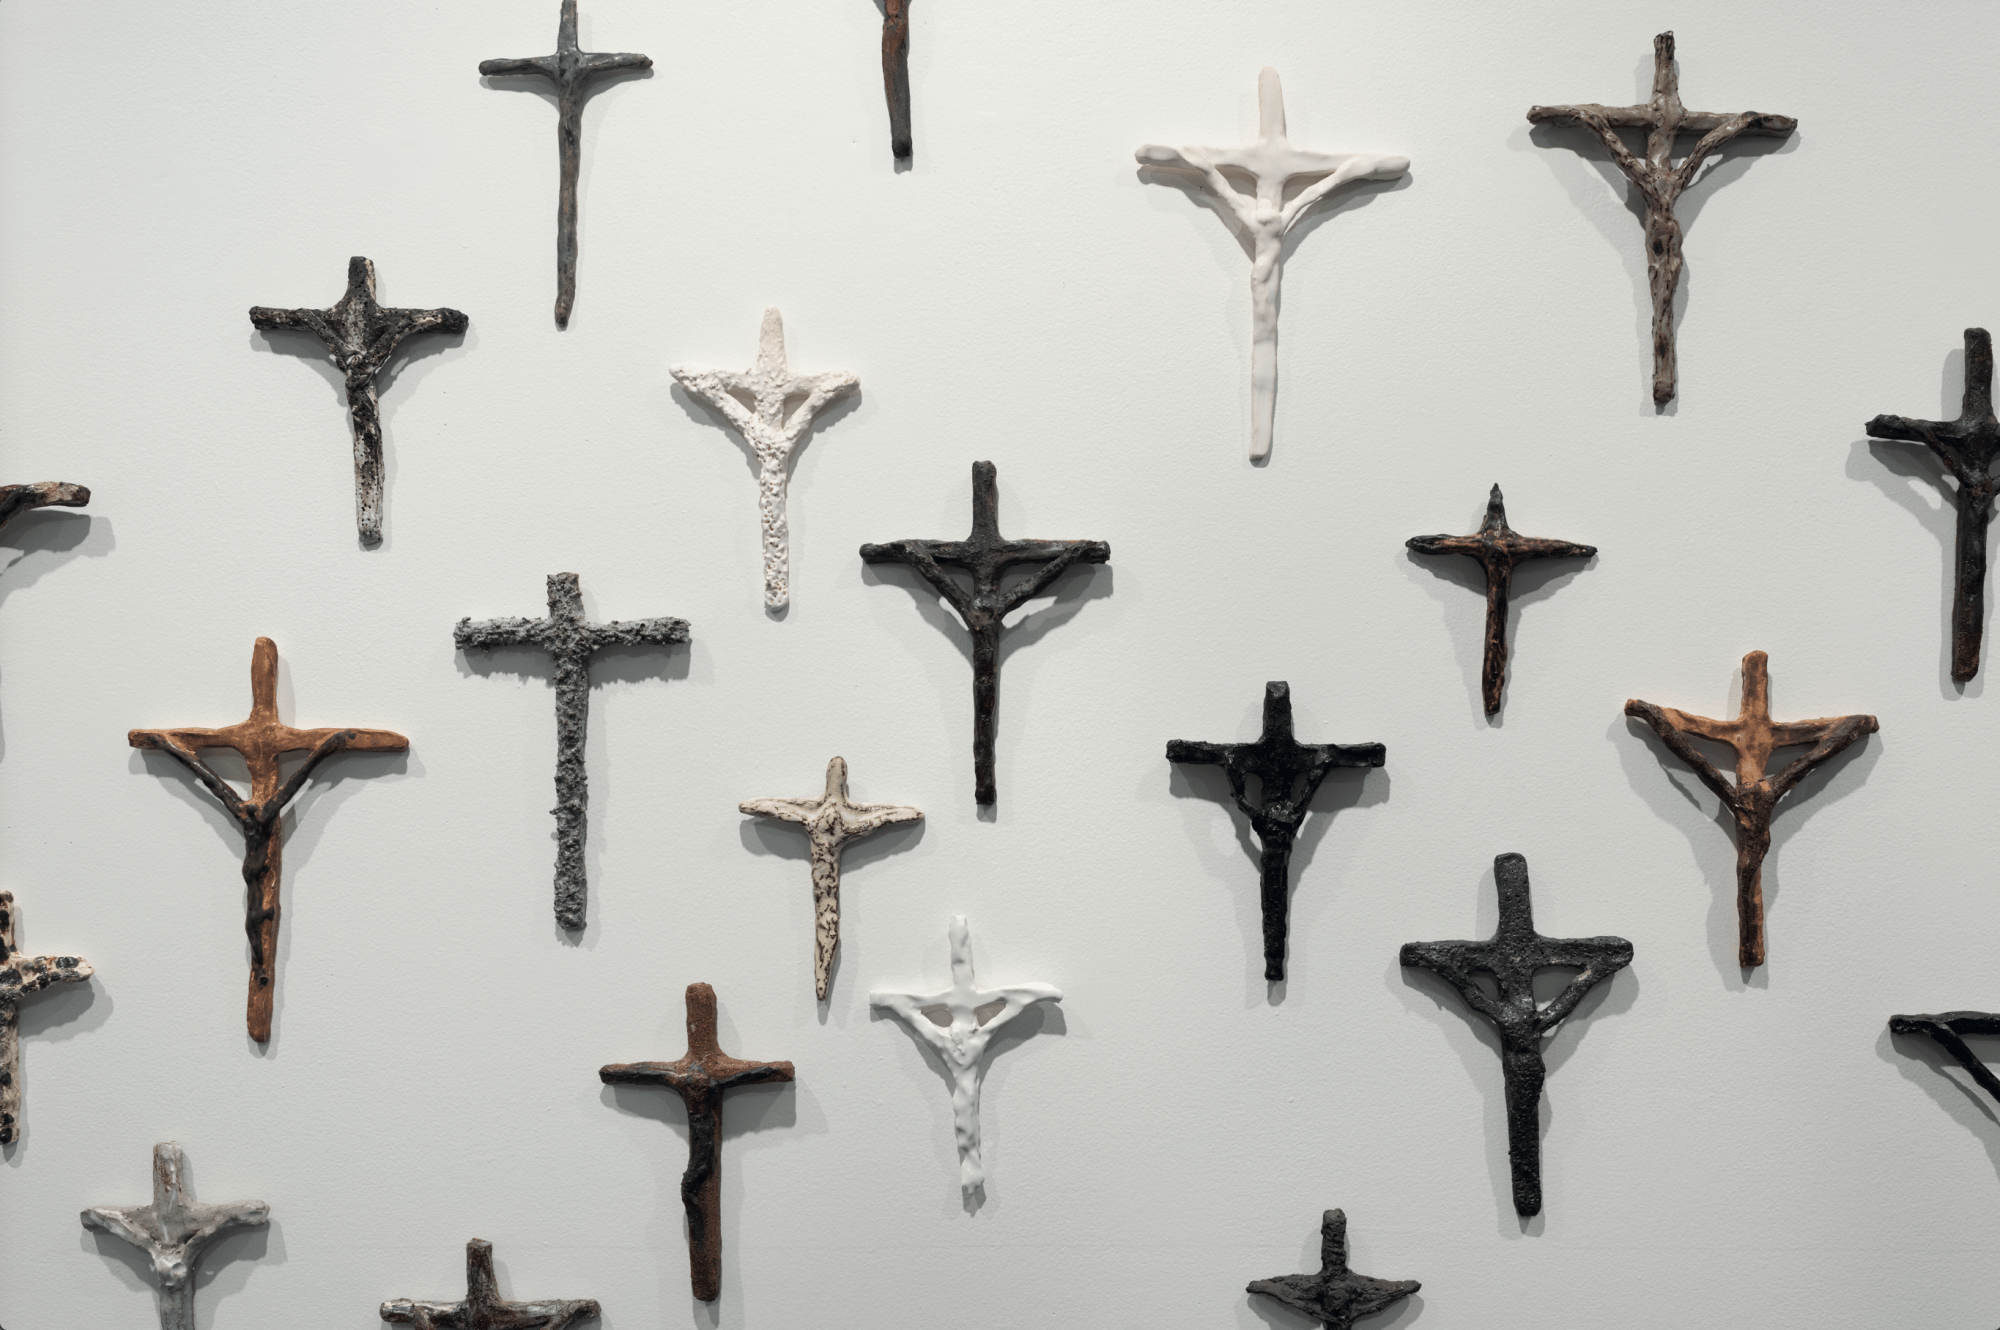 Richard Lewer
Crucifixes (detail) 2018